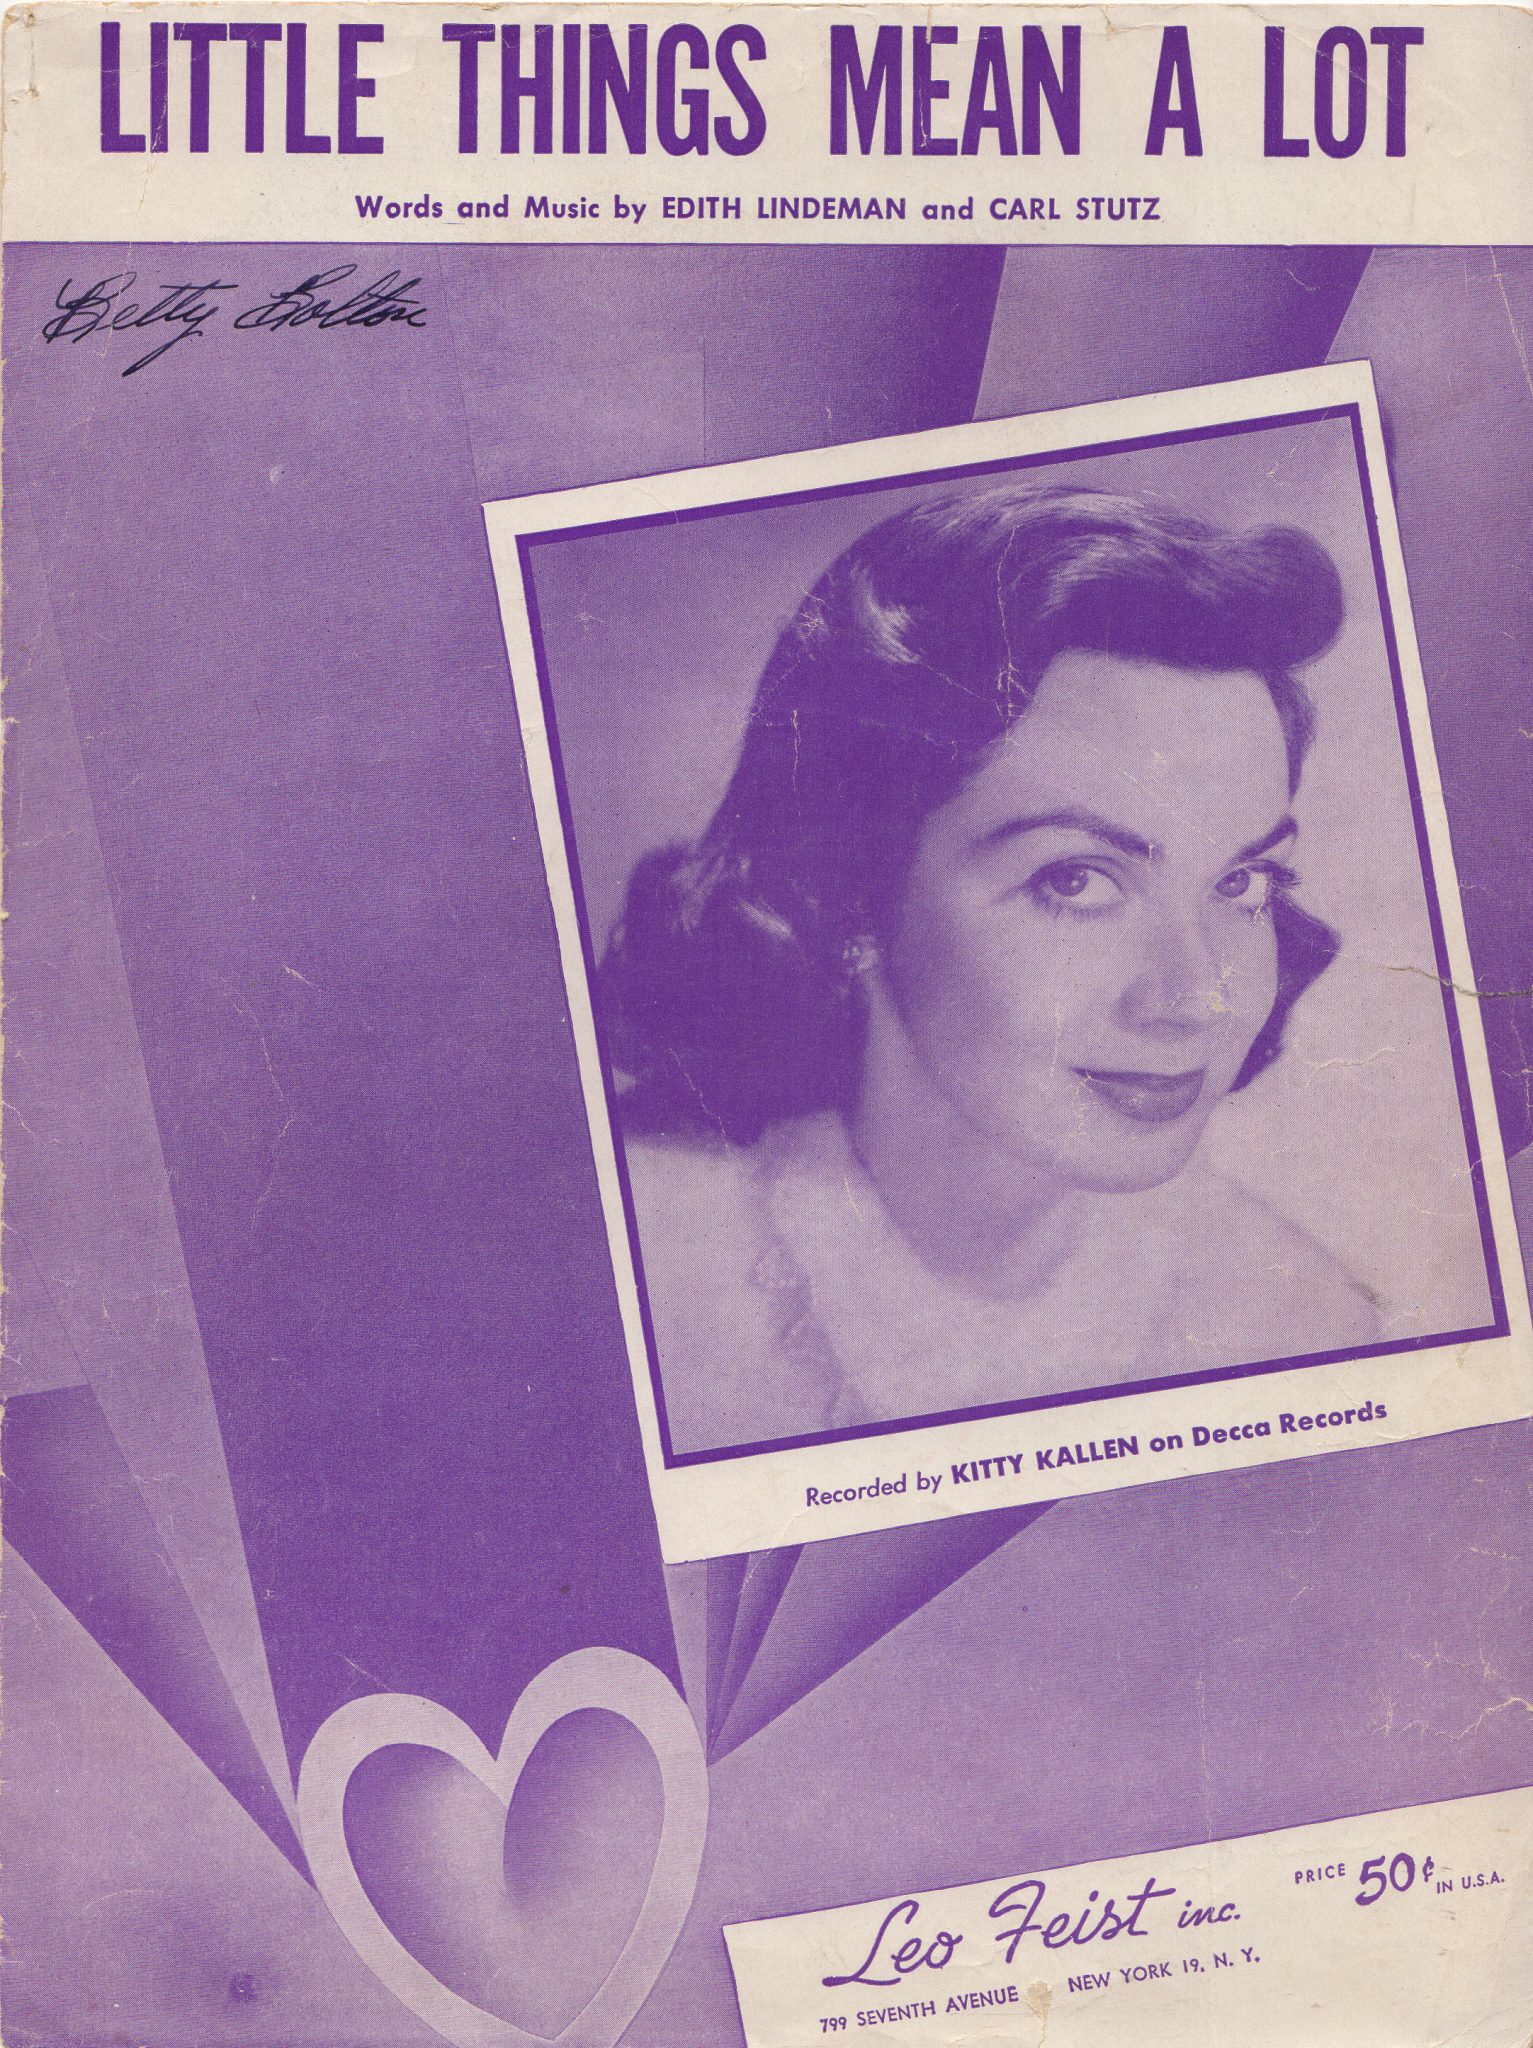 LITTLE THINGS MEAN A LOT - Edith Lindeman & Carl Stutz, 1954 Music